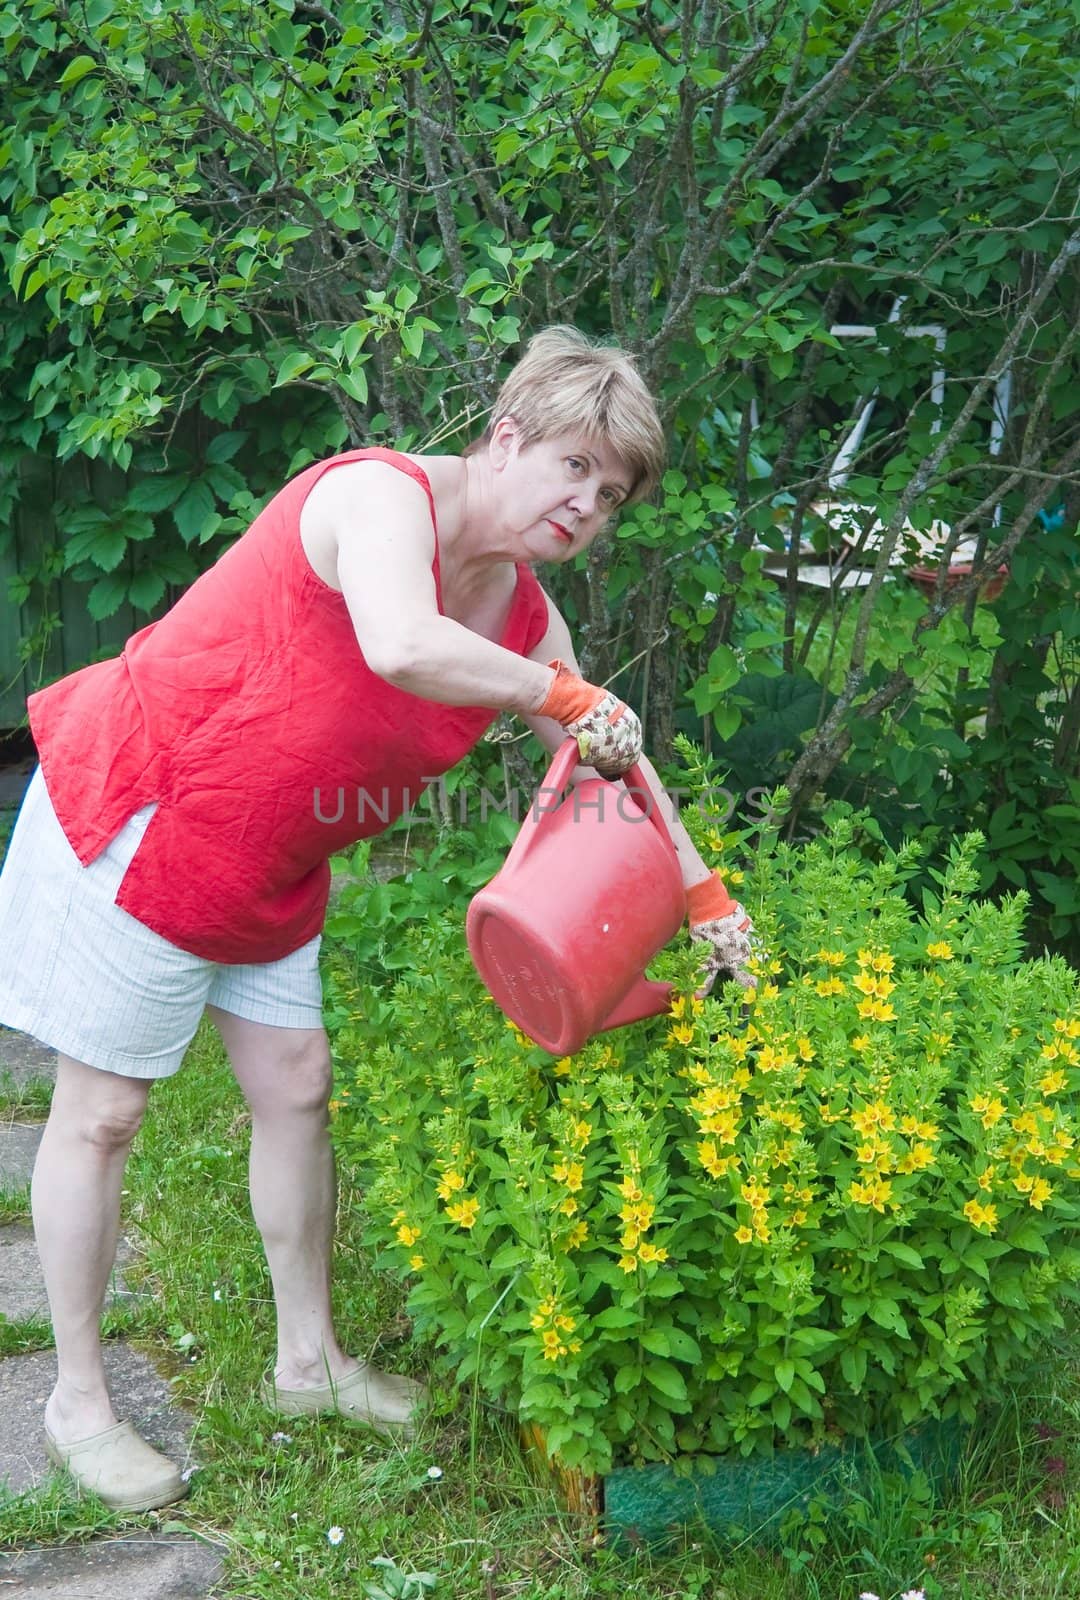 Woman watering flowers by nikolpetr